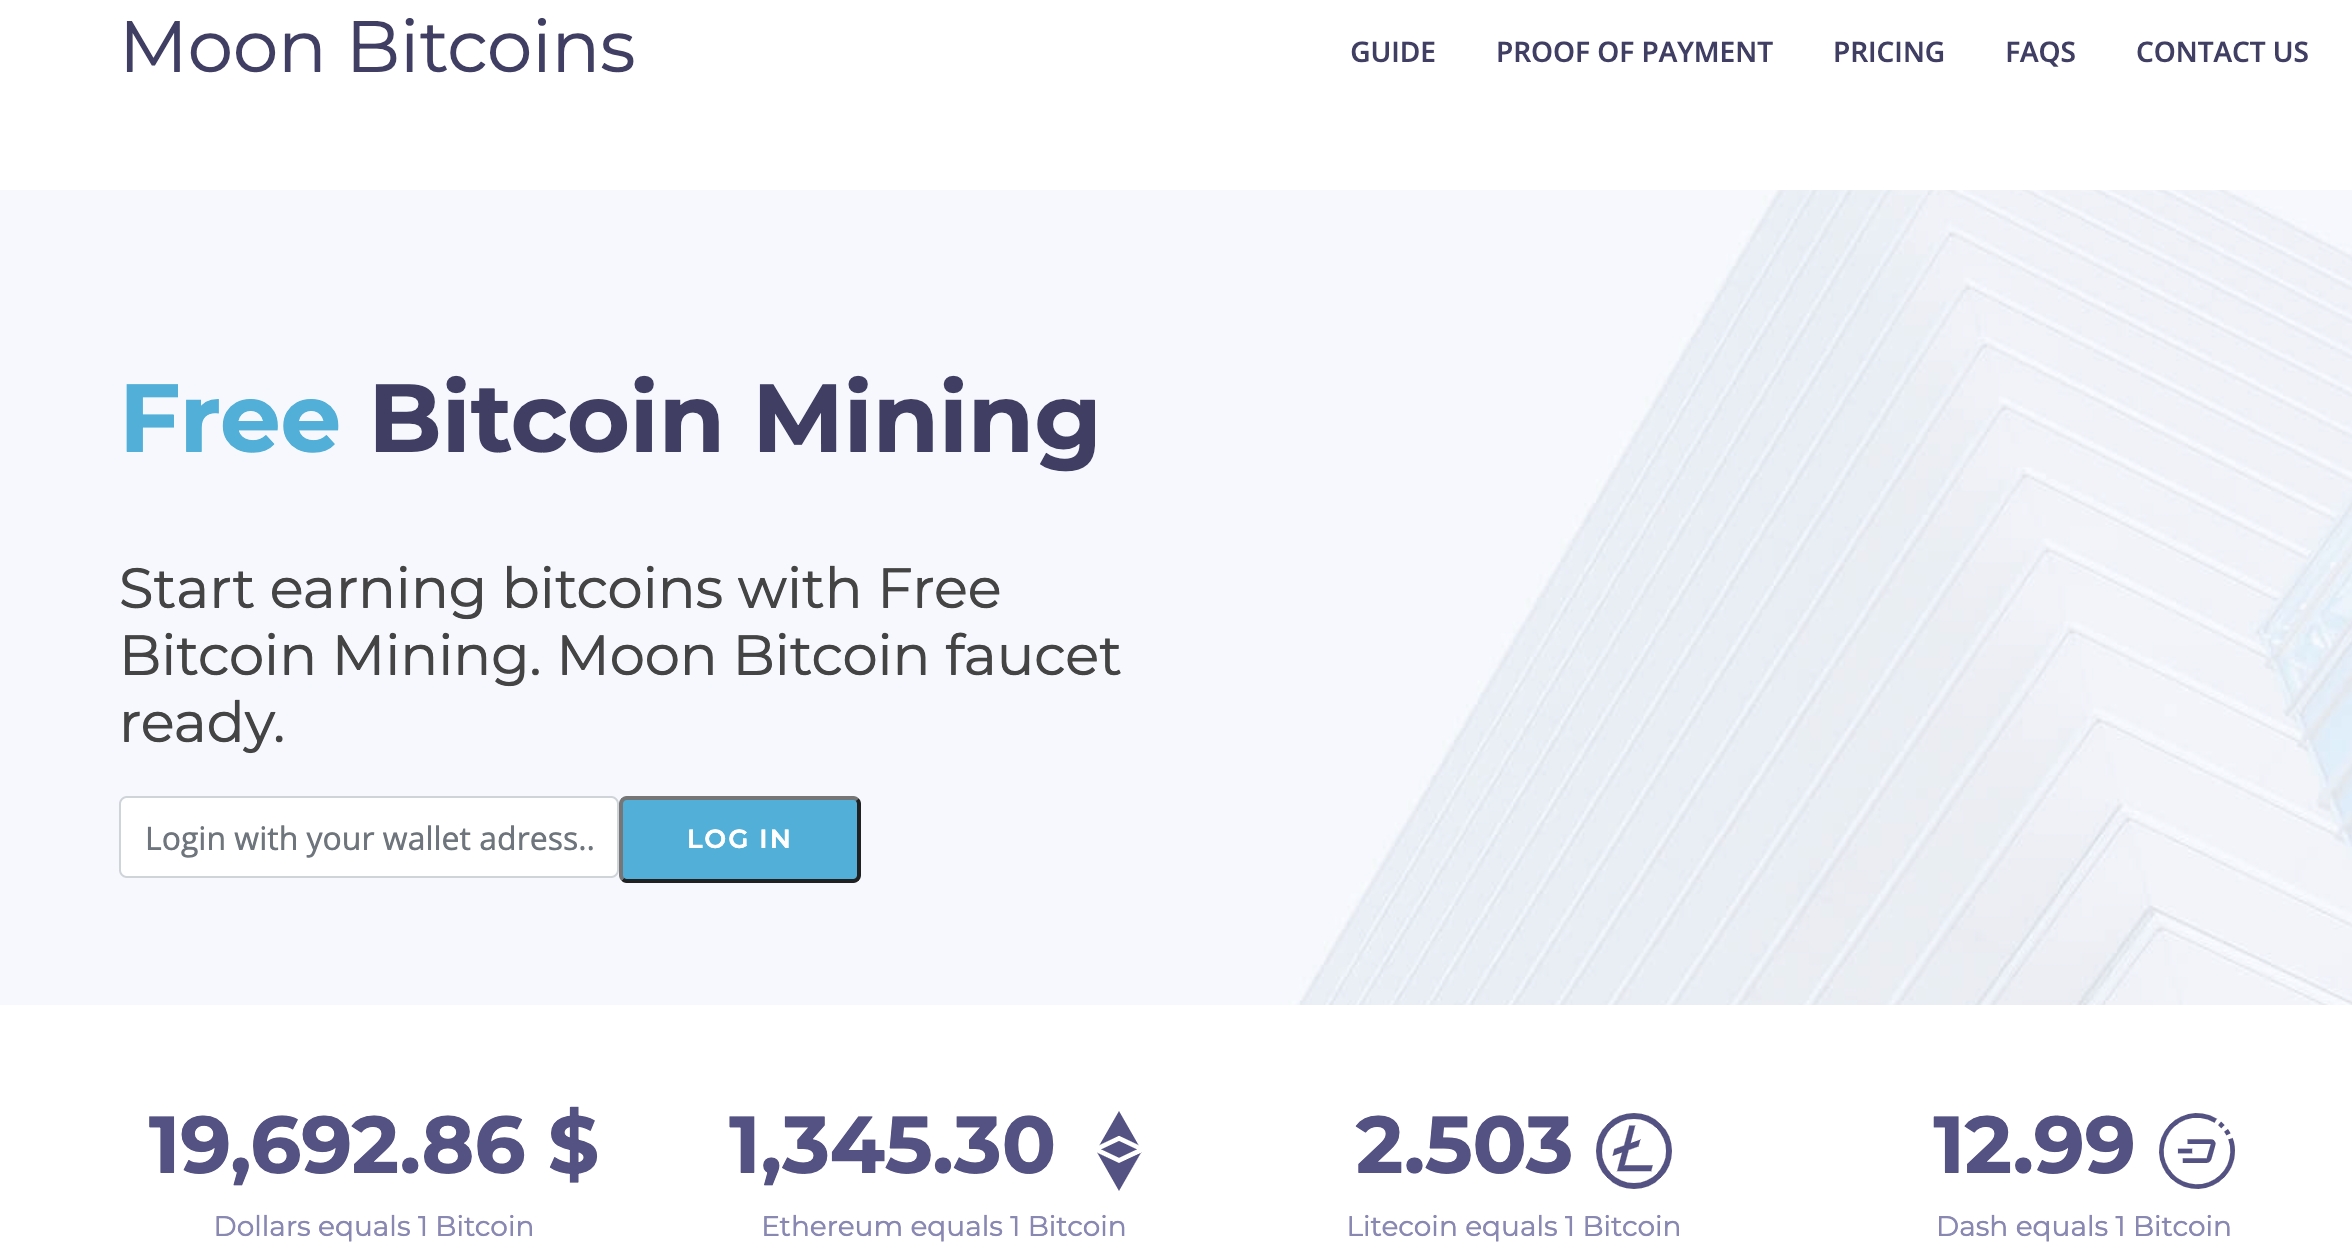 Moon Bitcoins Bitcoin mining